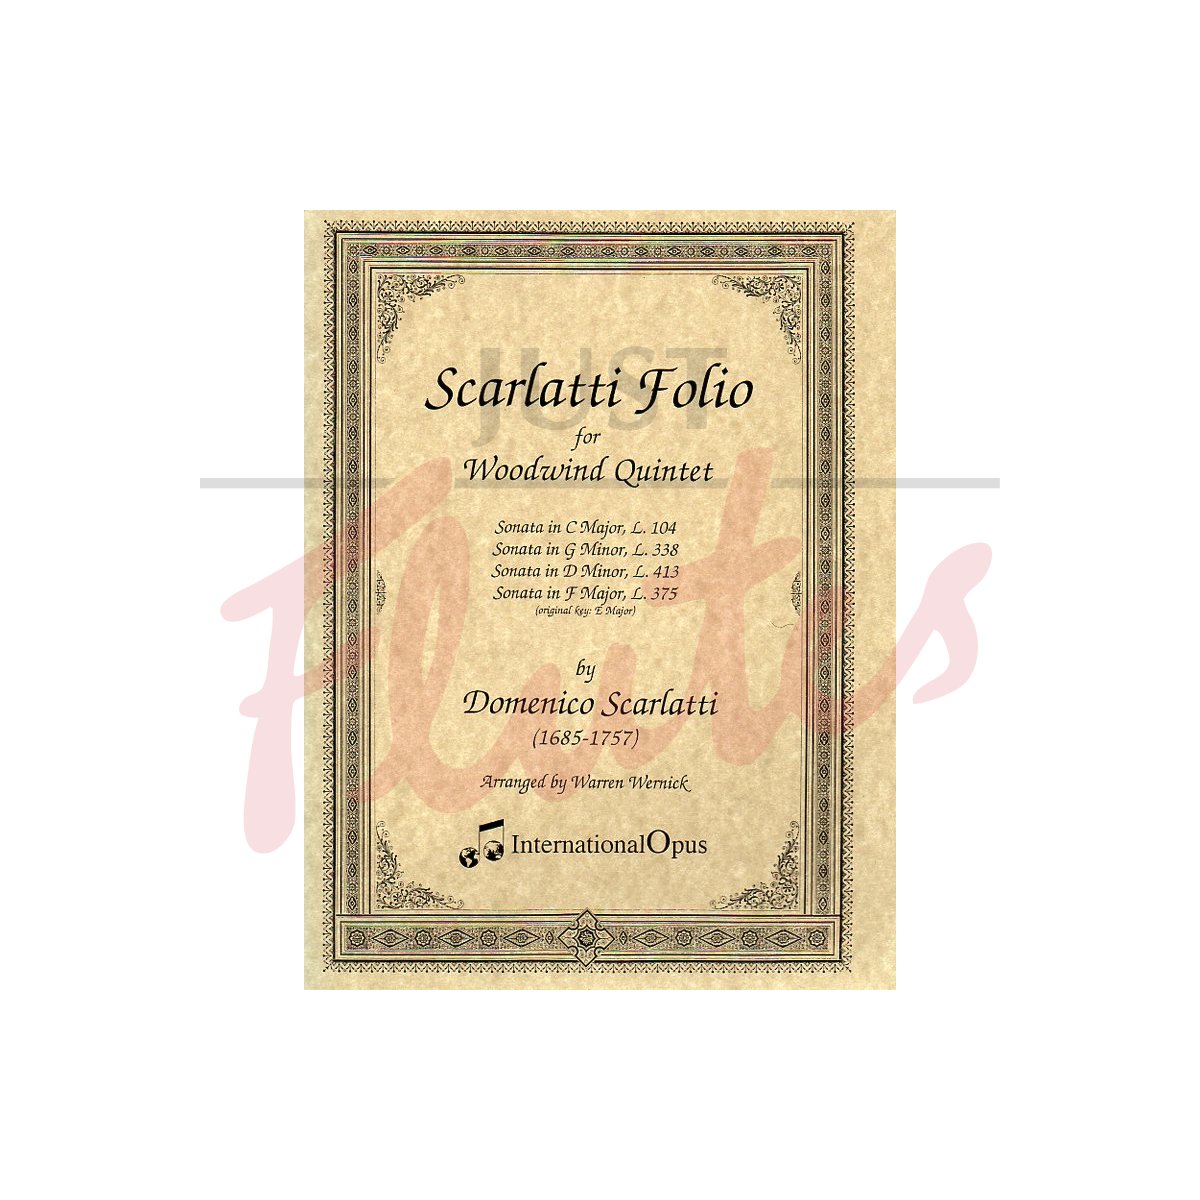 Scarlatti Folio [Wind Quintet]